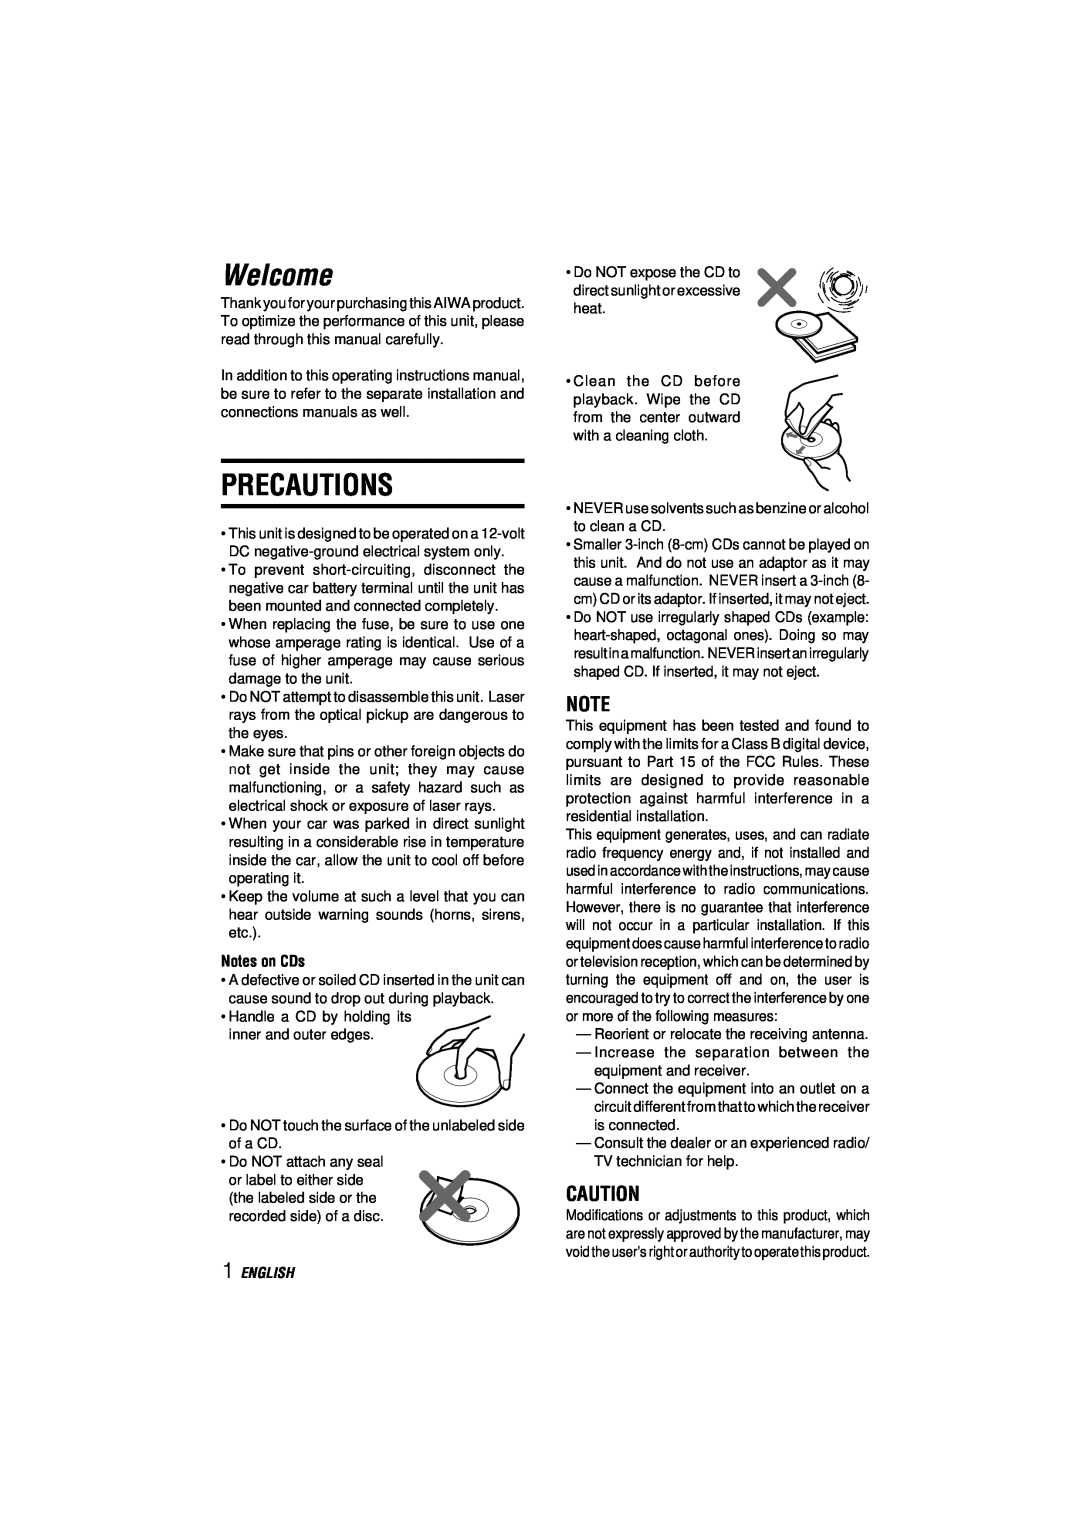 Aiwa CDC-MP3 manual Welcome, Precautions, English 